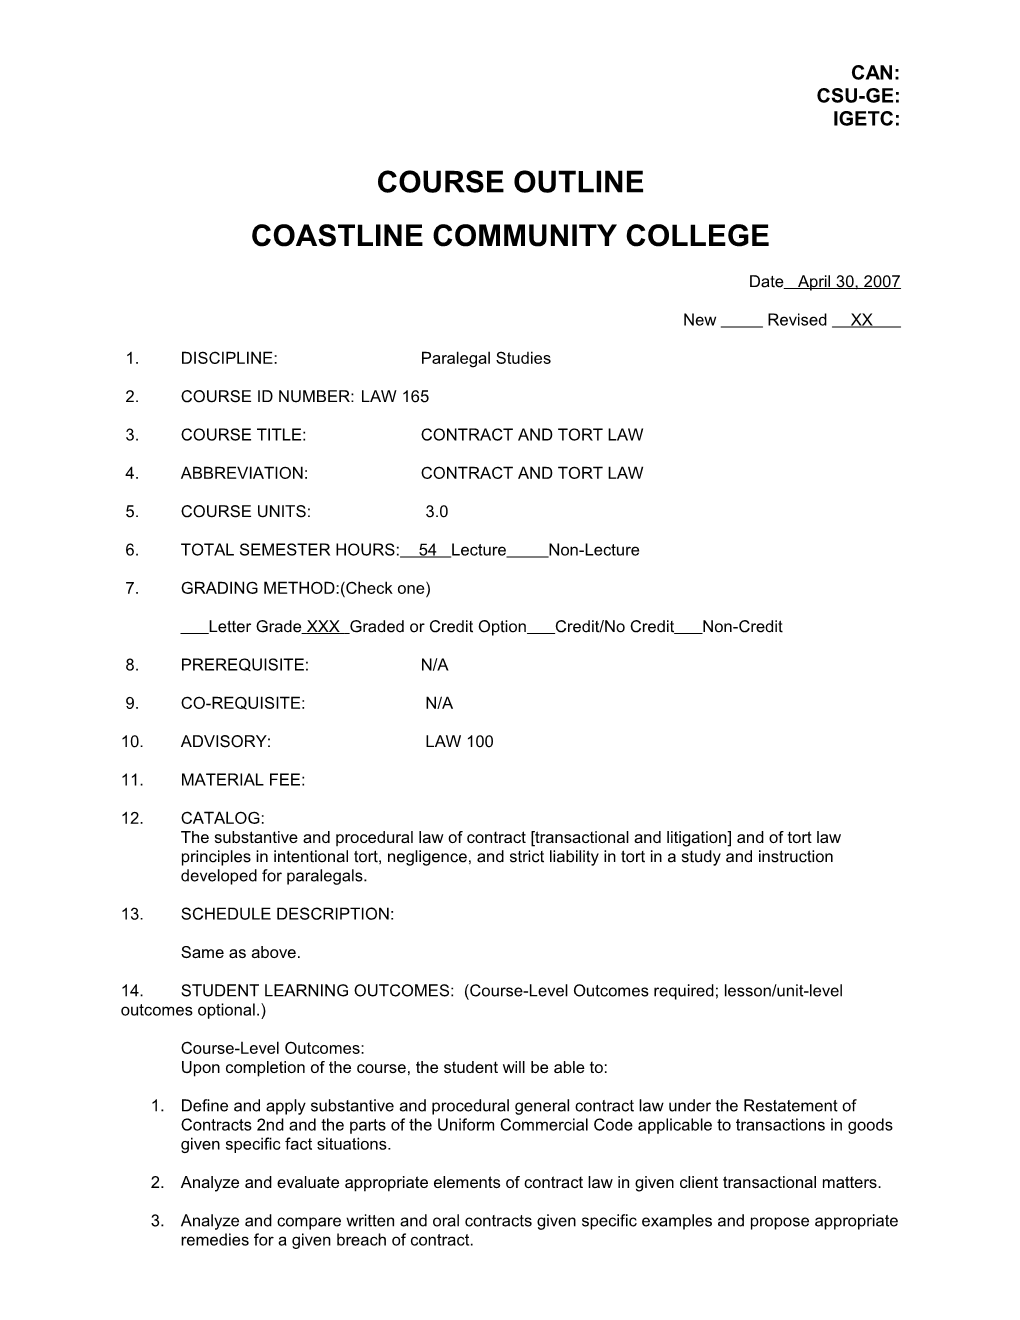 Coastlinecommunity College